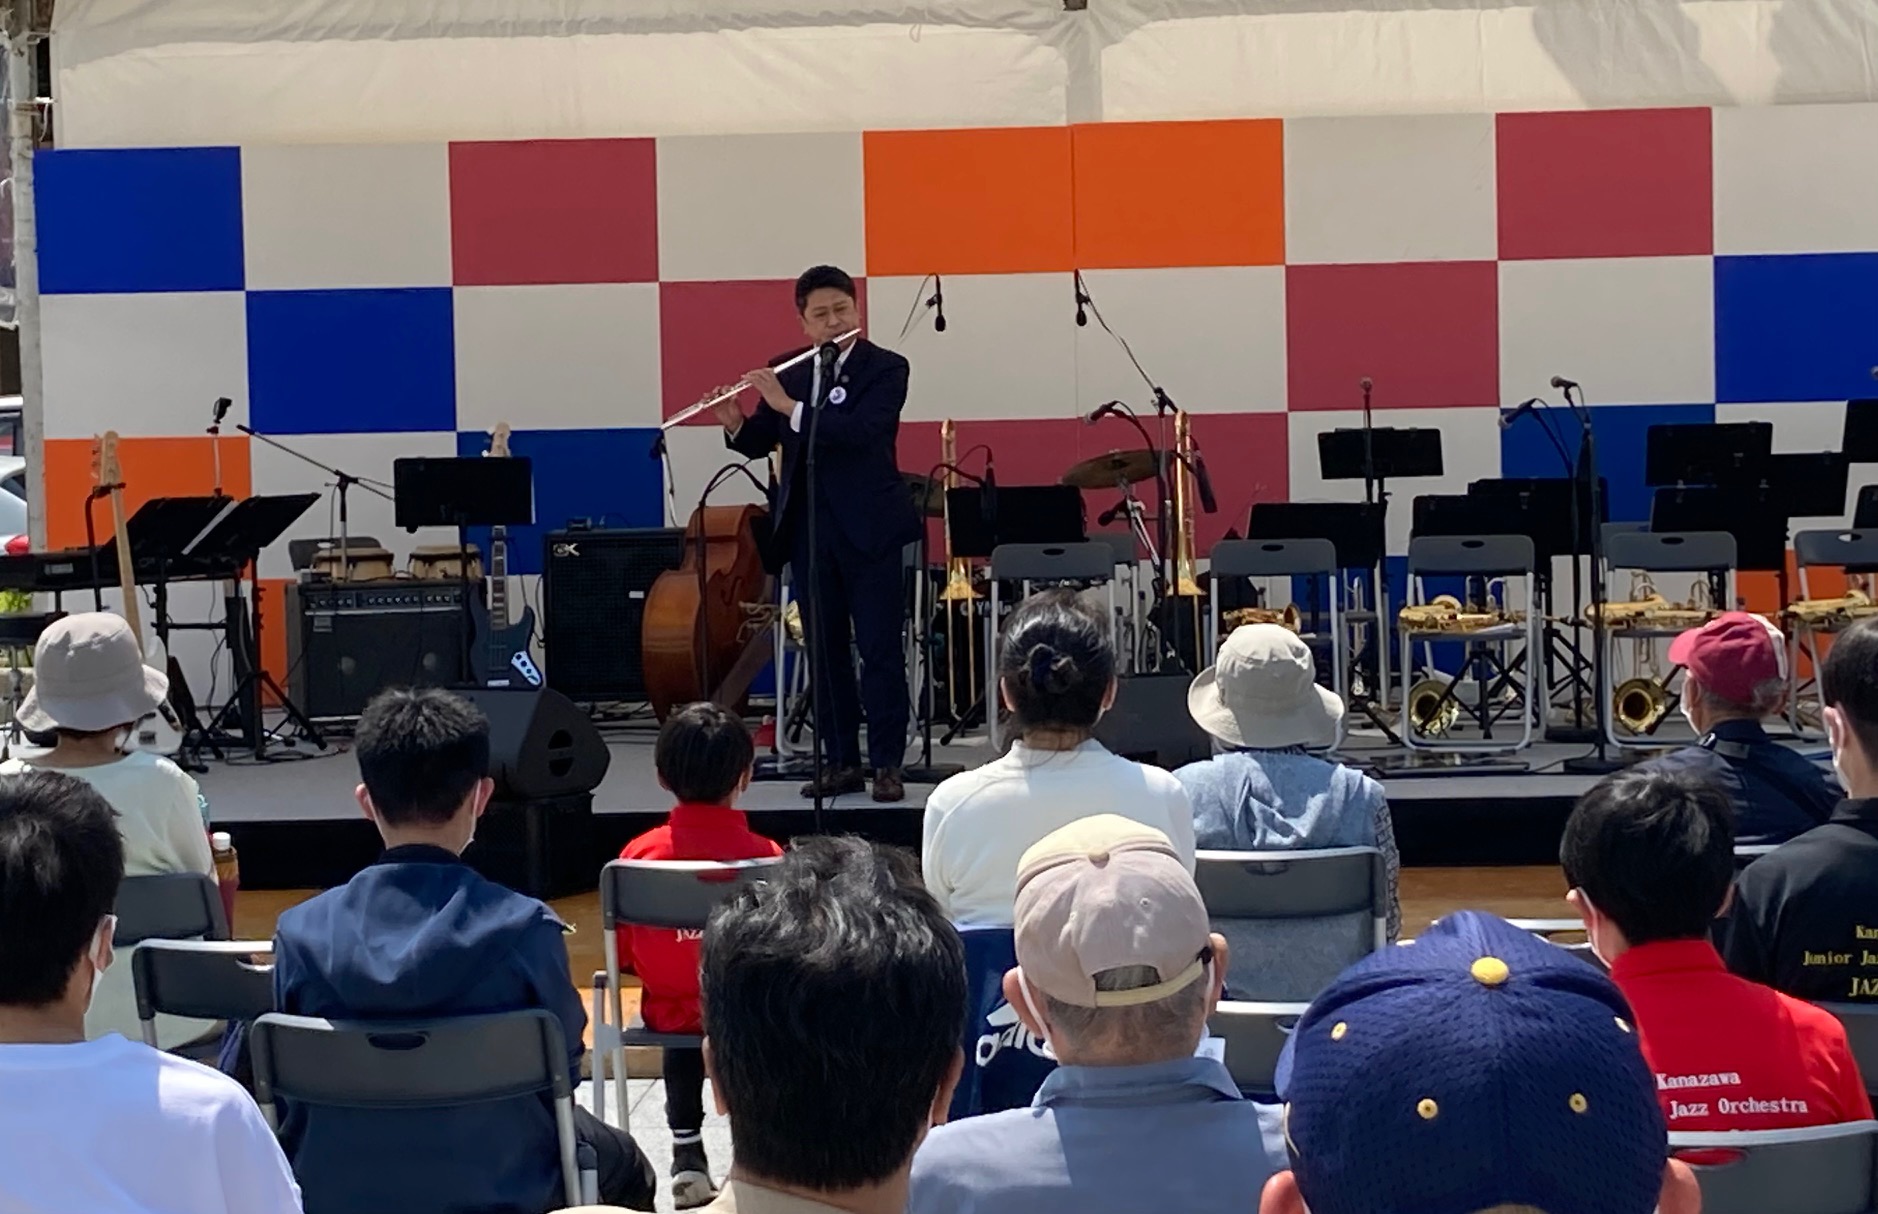 UNESCO International JazzDay 2022 in Kanazawaでフルートを演奏する市長